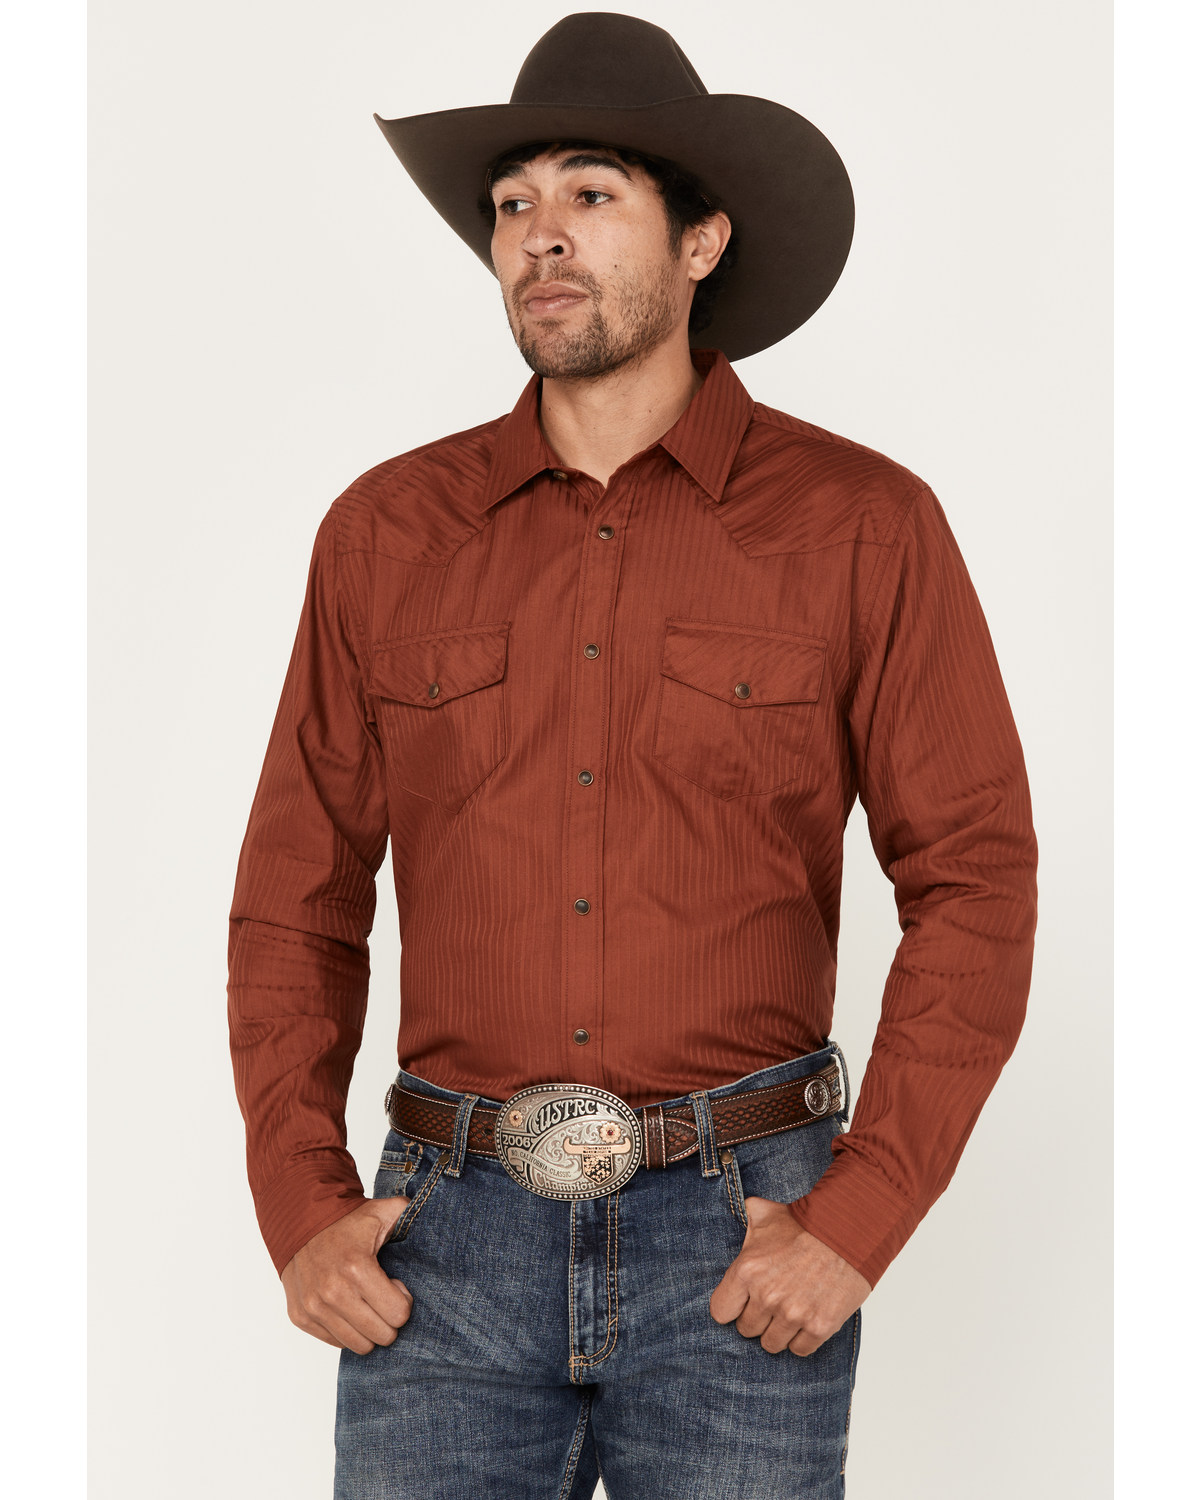 Gibson Men's Southside Satin Striped Long Sleeve Snap Western Shirt